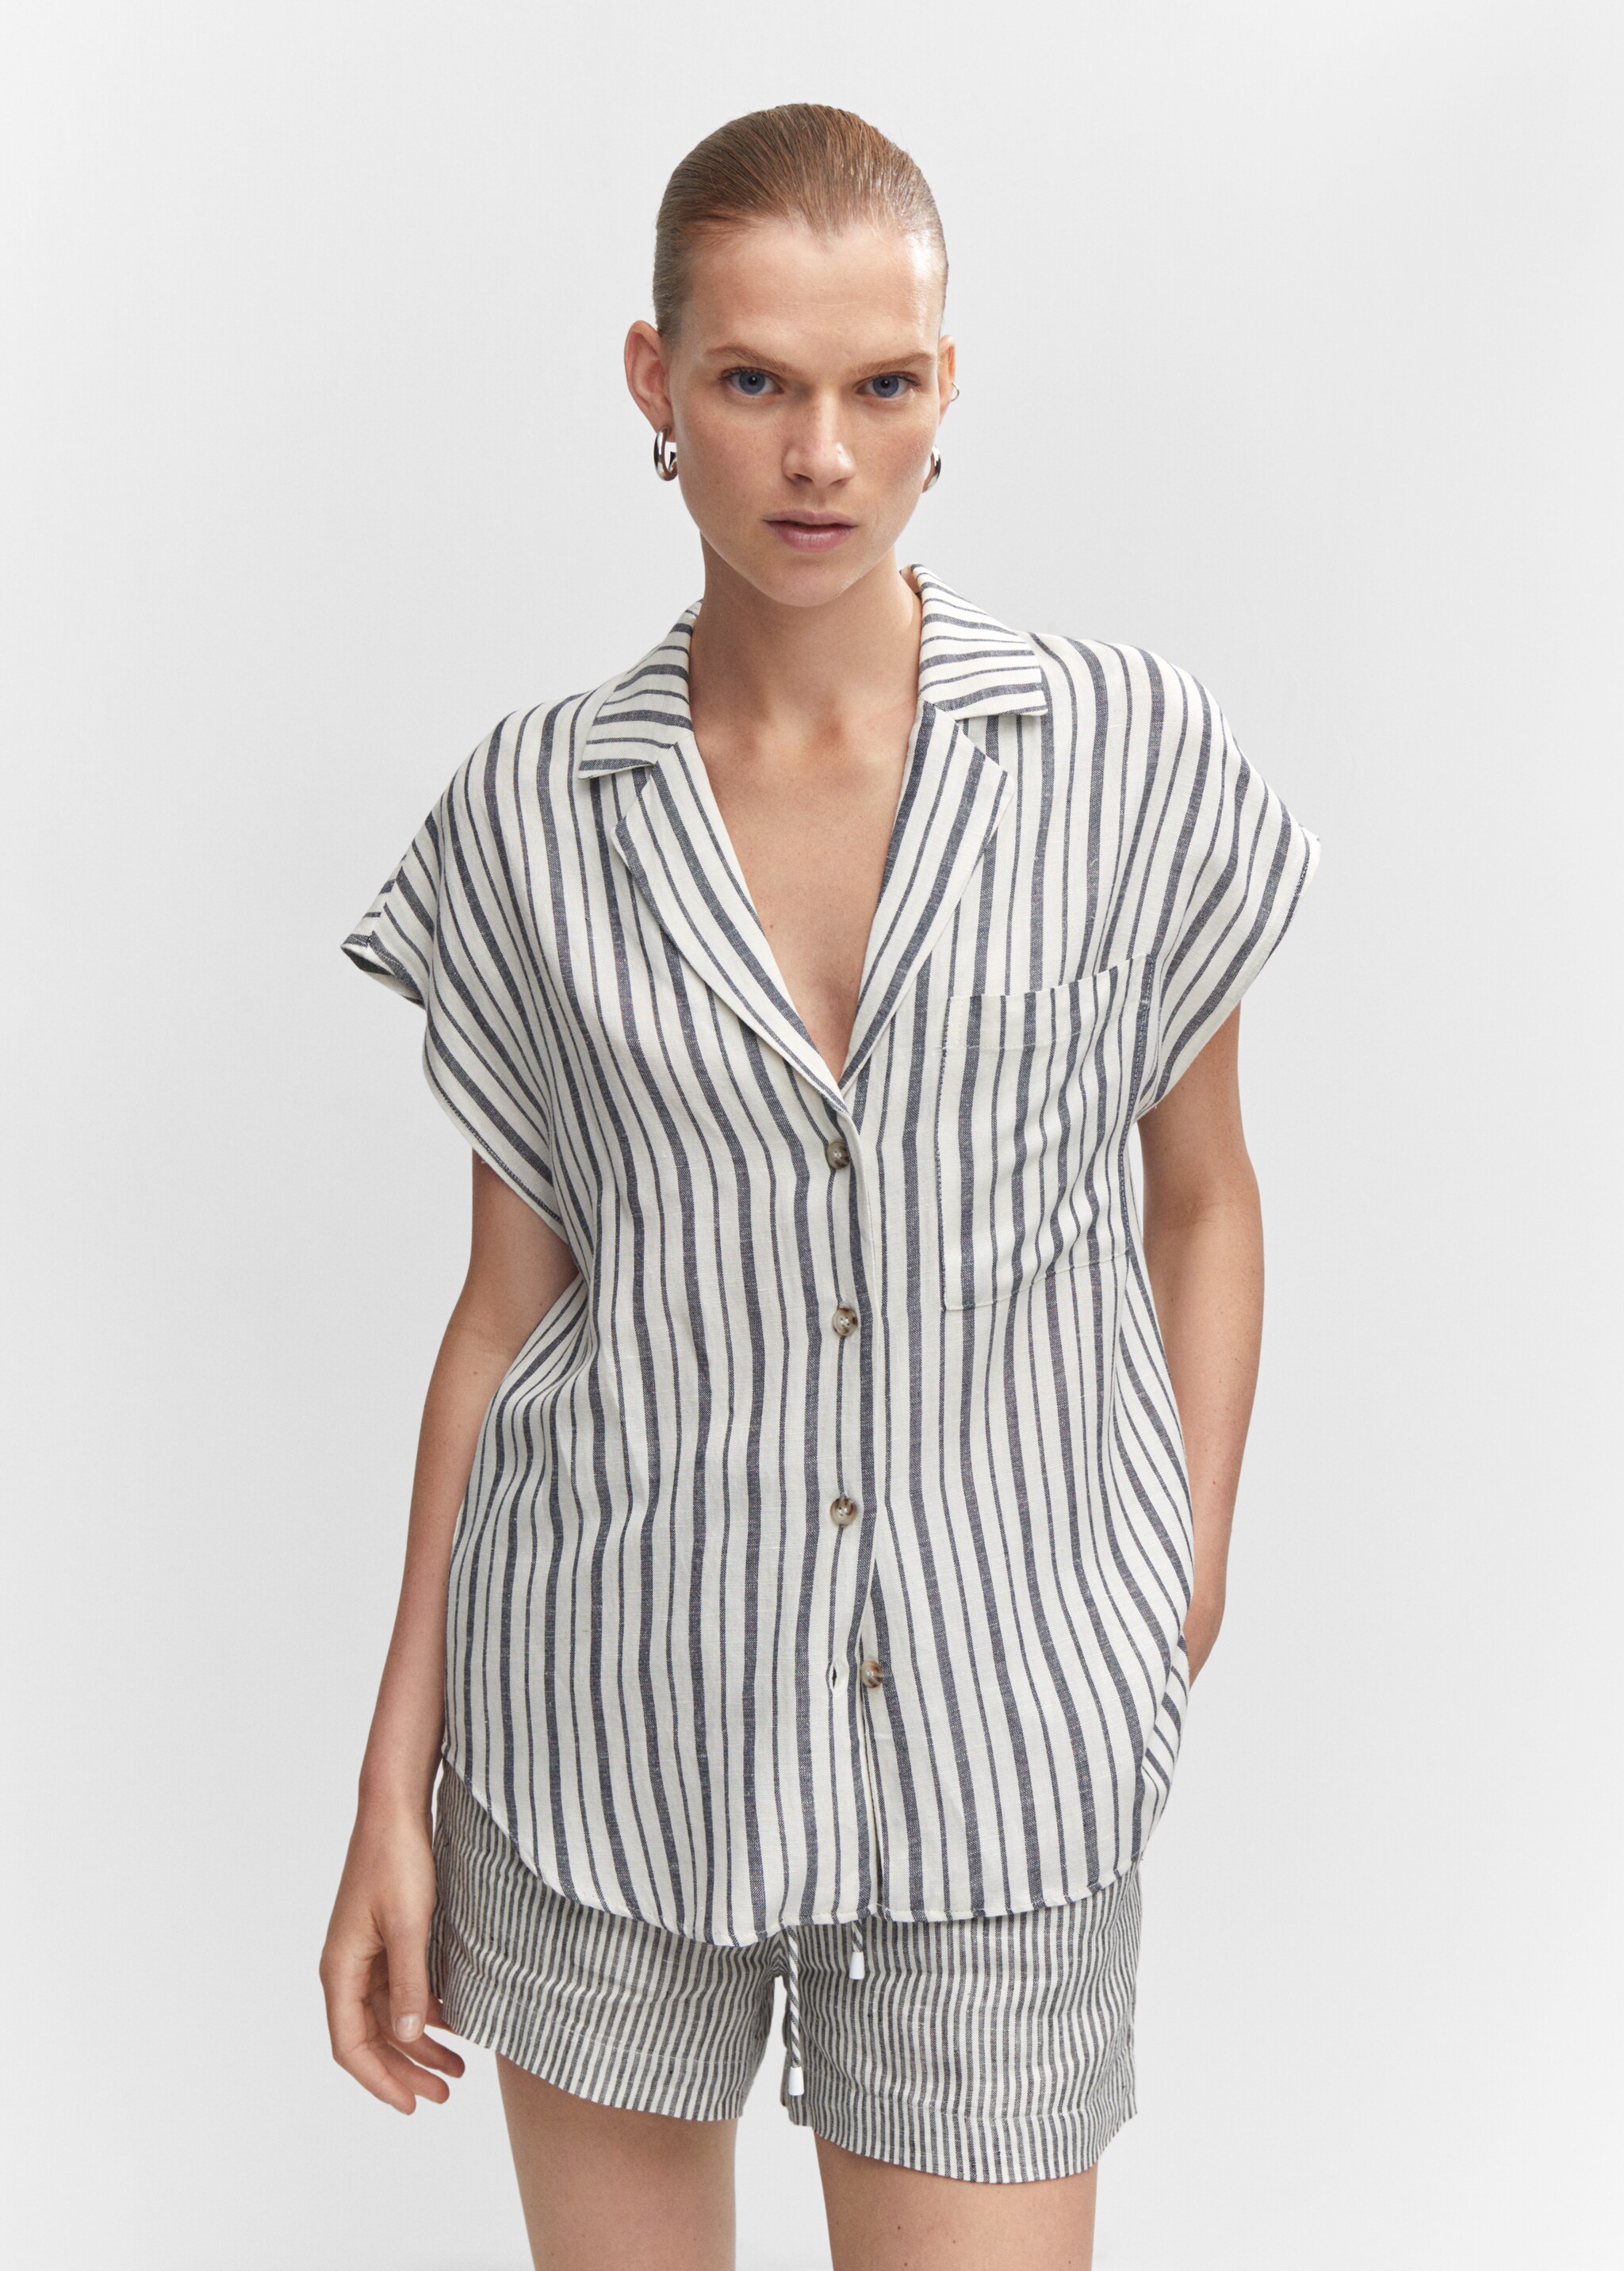 Camisa lino rayas - Plano medio